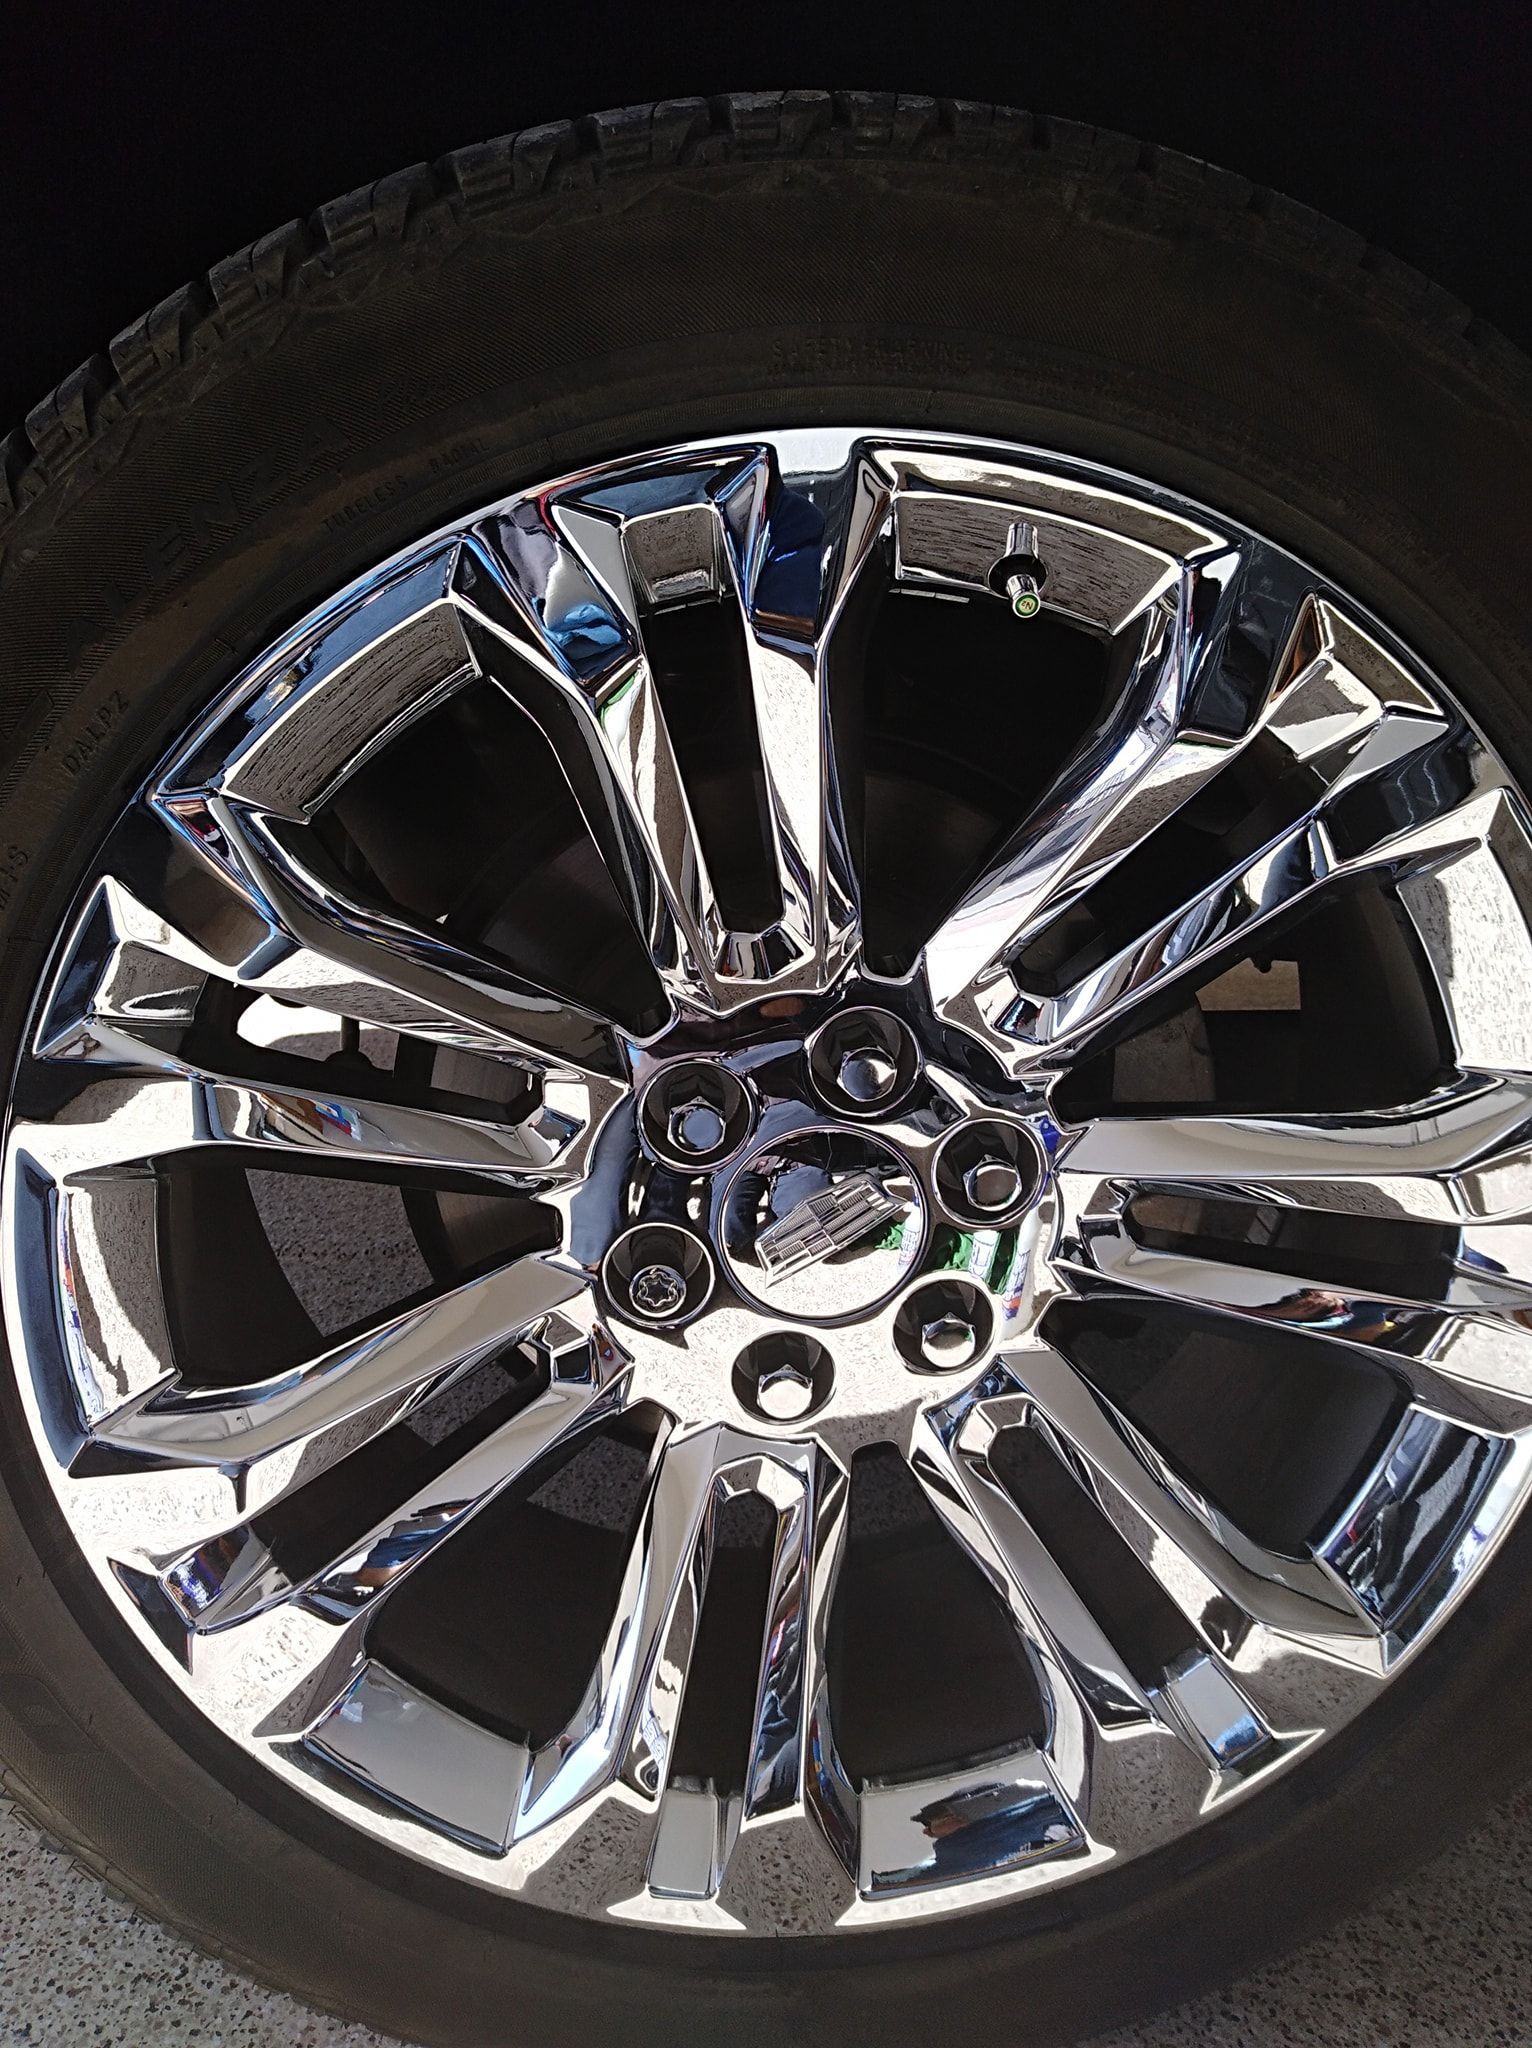 a close up of a chrome wheel on a car